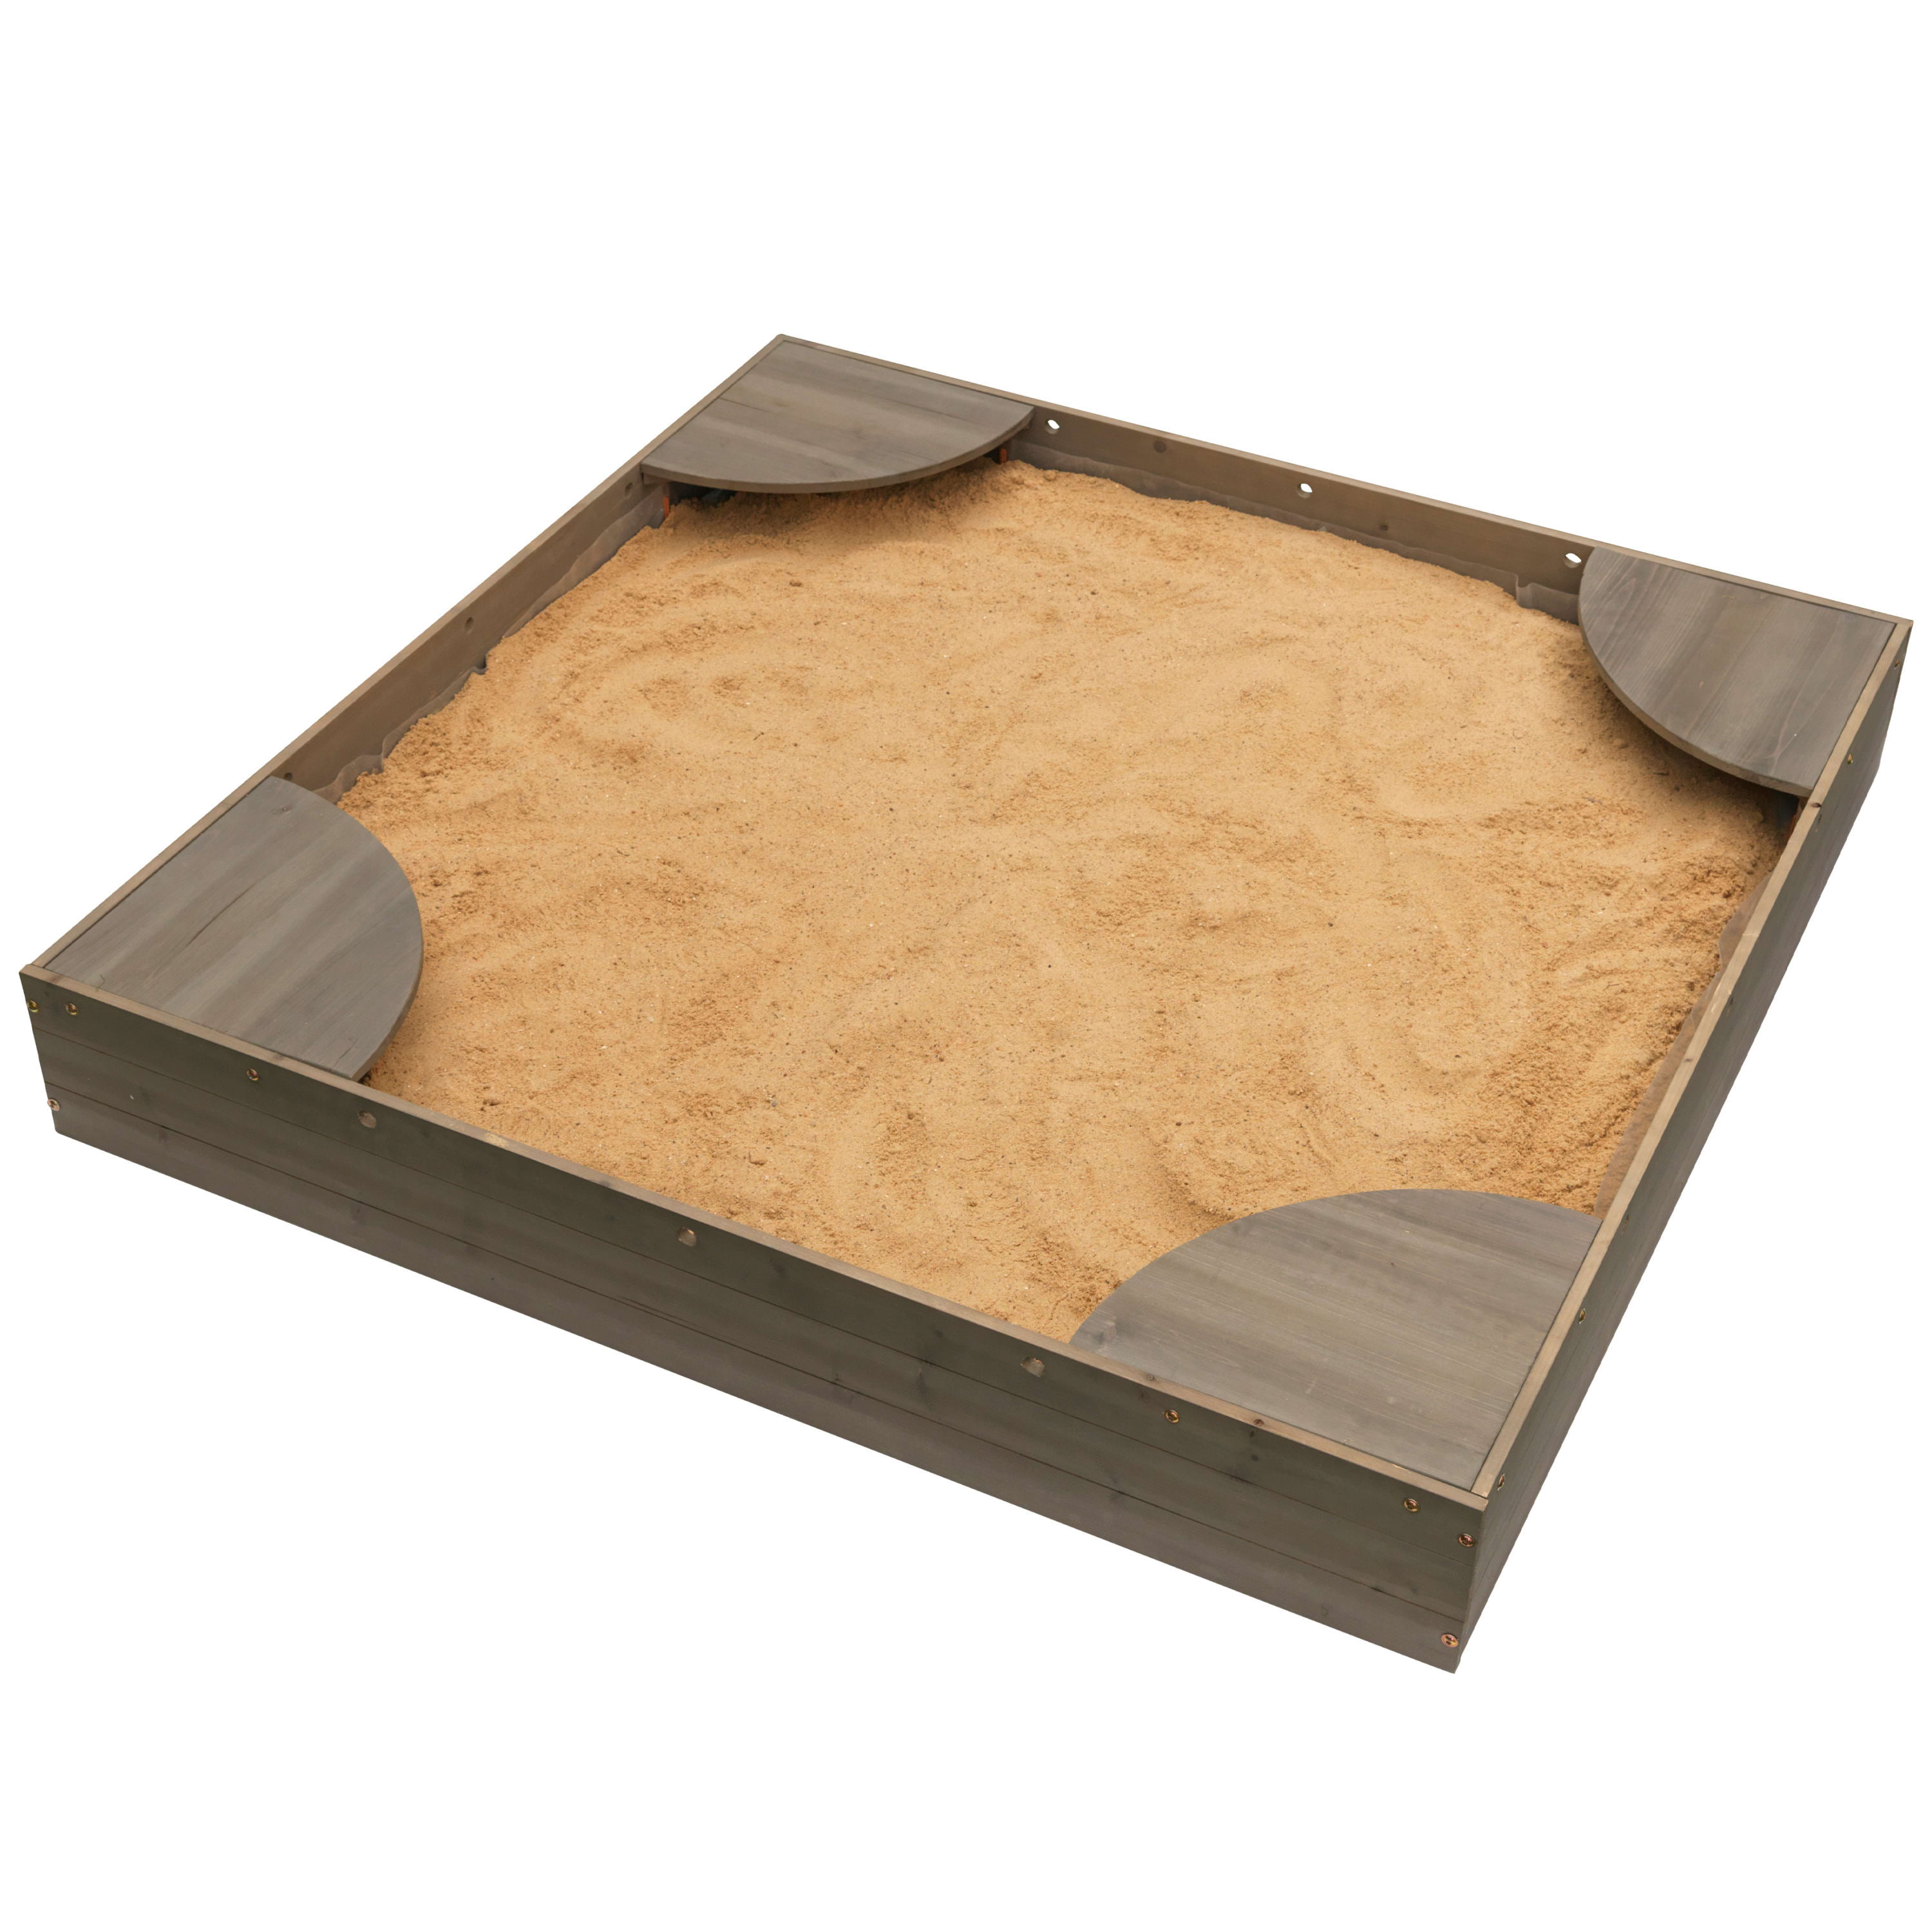 KidKraft Wooden Backyard Sandbox with Built-in Corner Seating and Mesh Cover, Gray